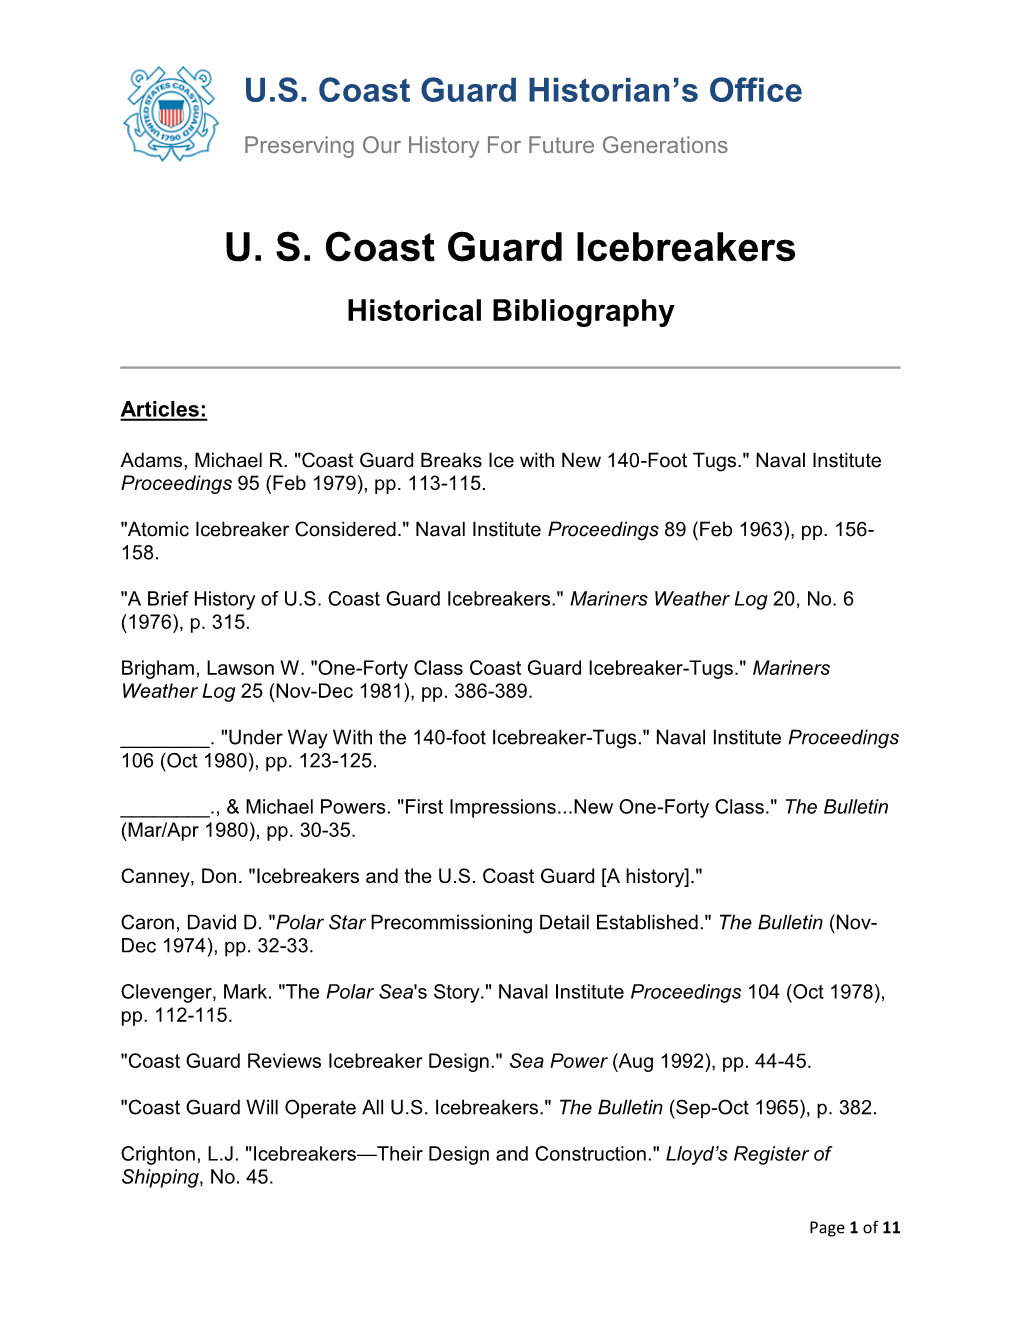 U. S. Coast Guard Icebreakers Historical Bibliography